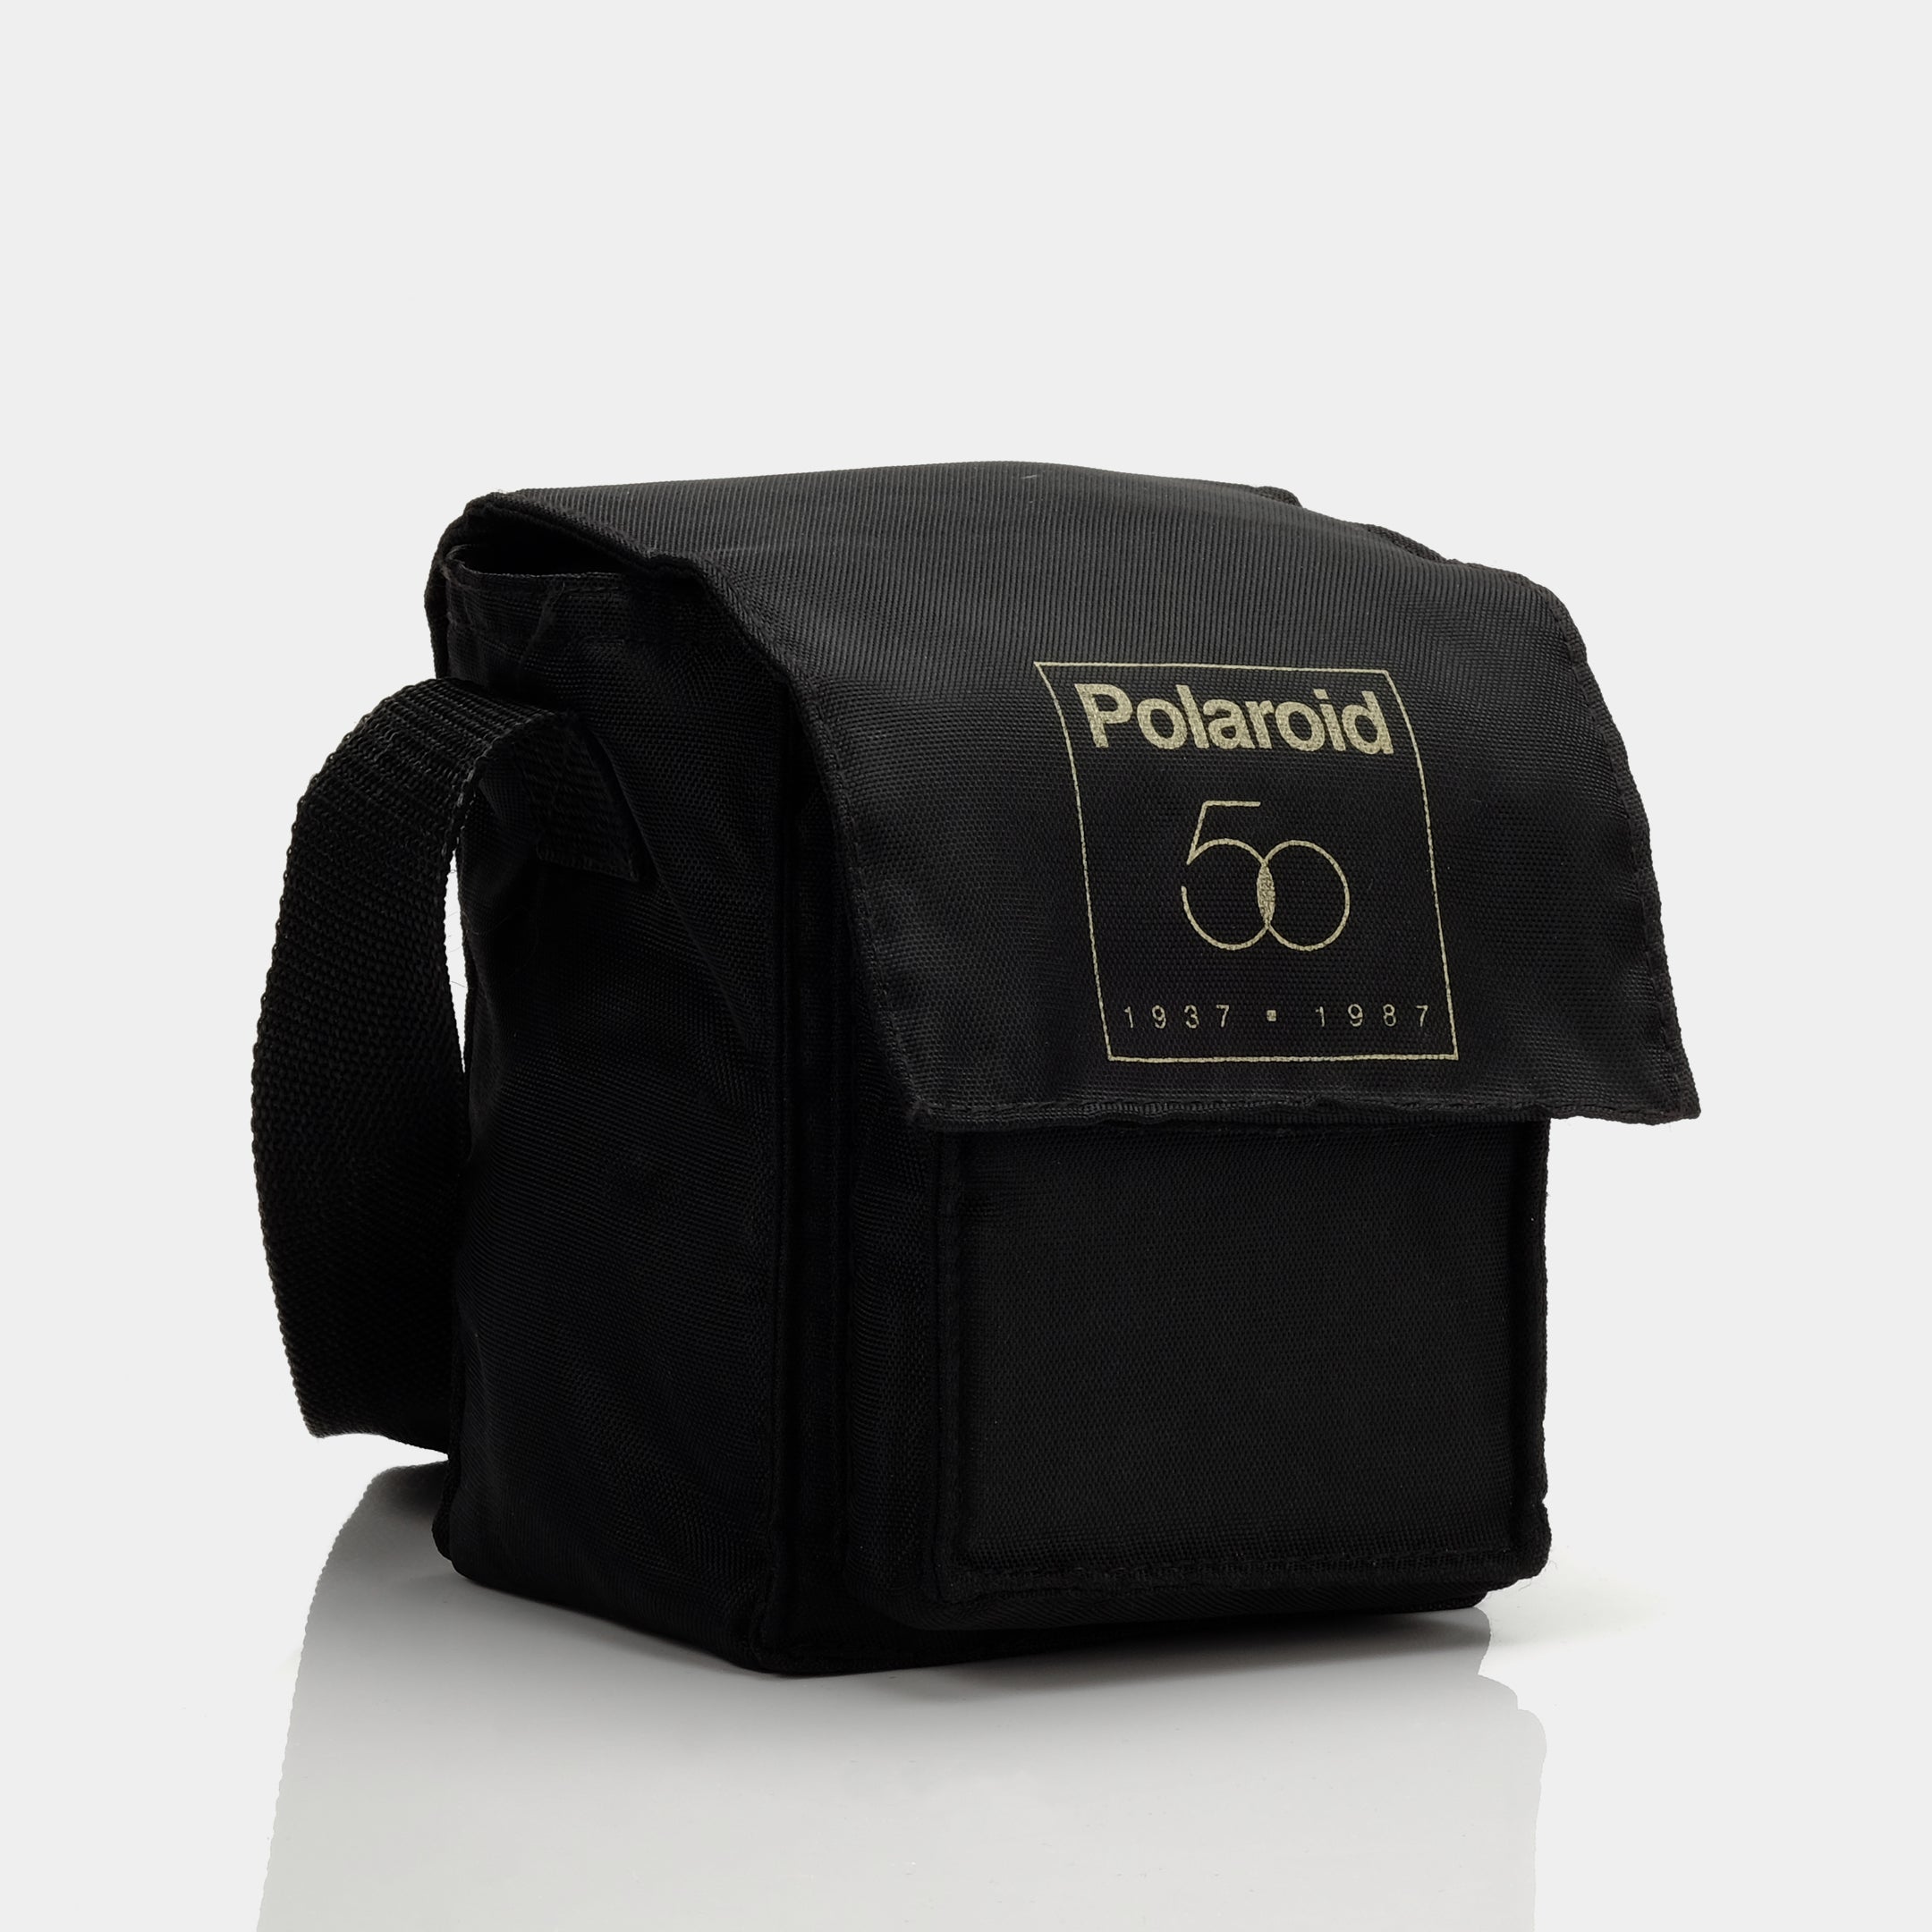 Polaroid 50th Anniversary Edition Instant Camera Bag